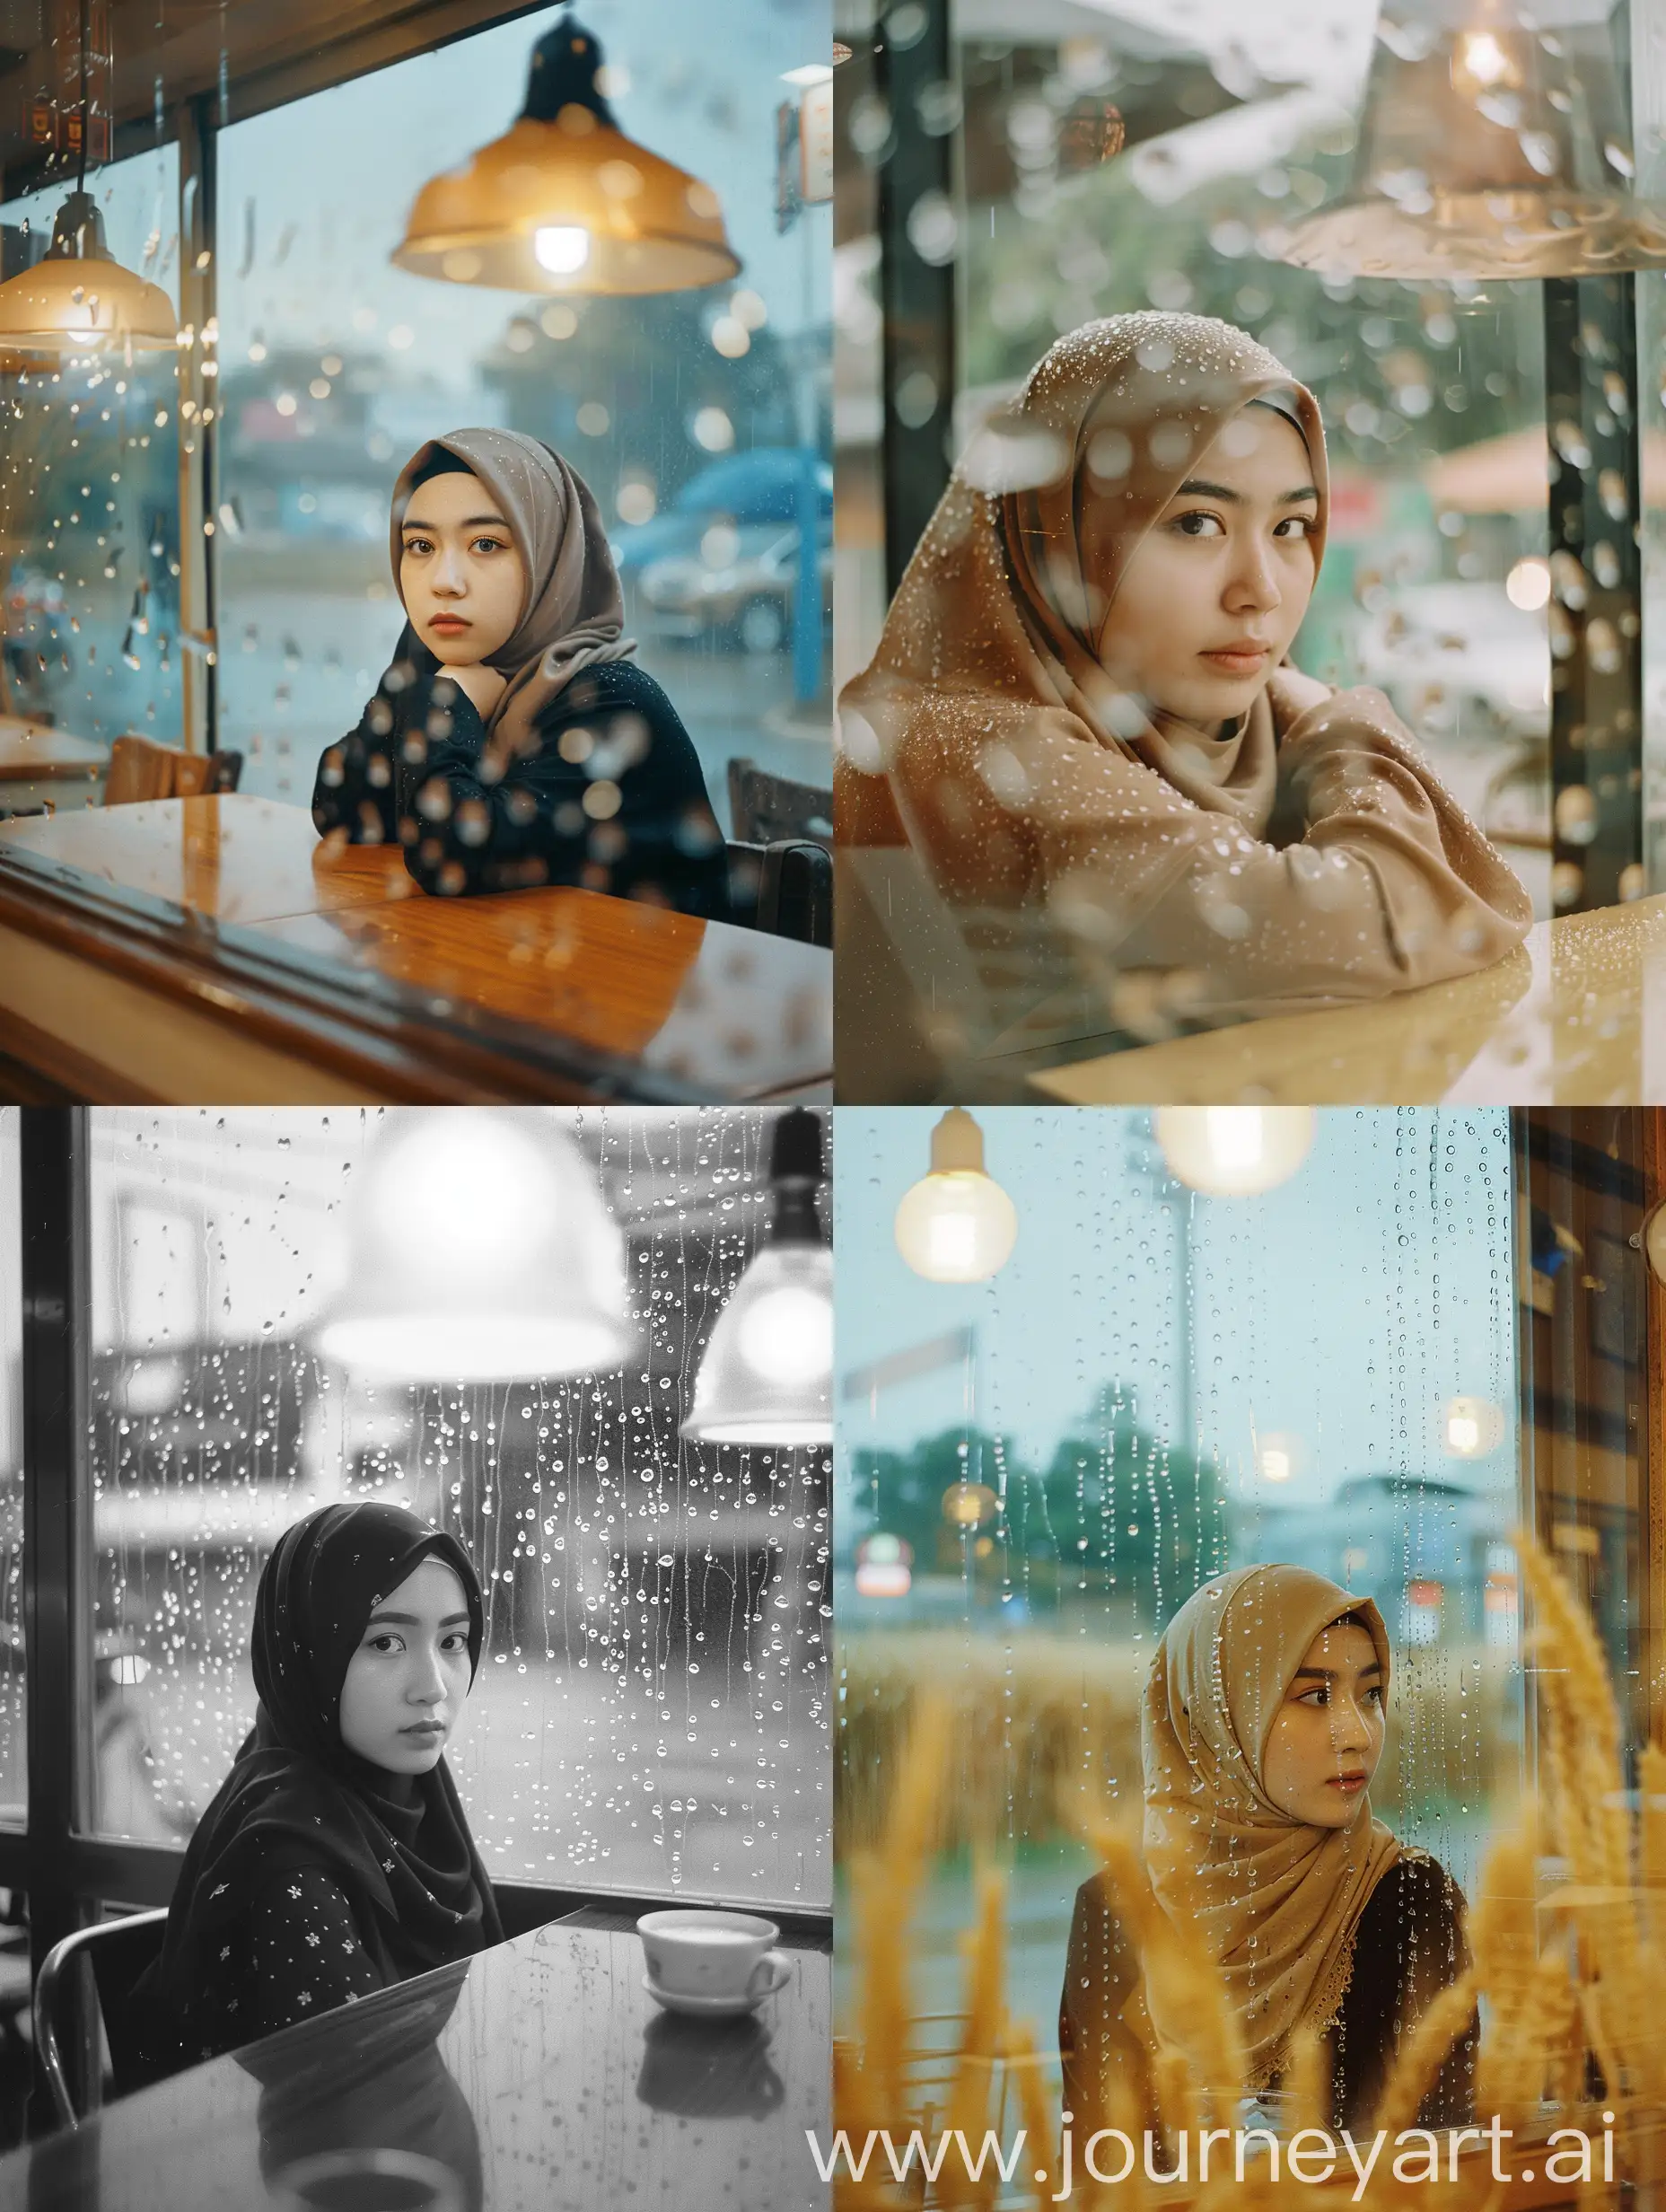 sudut lebar seorang wanita Asia hijab di dalam kafe melalui jendela. Banyak tetes hujan di jendela dan pantulan yang sangat kuat di jendela. Dia melihat jauh di luar dengan kosong. suasana nostalgia yg tenang. gandum film. Kodak Portra 800 film